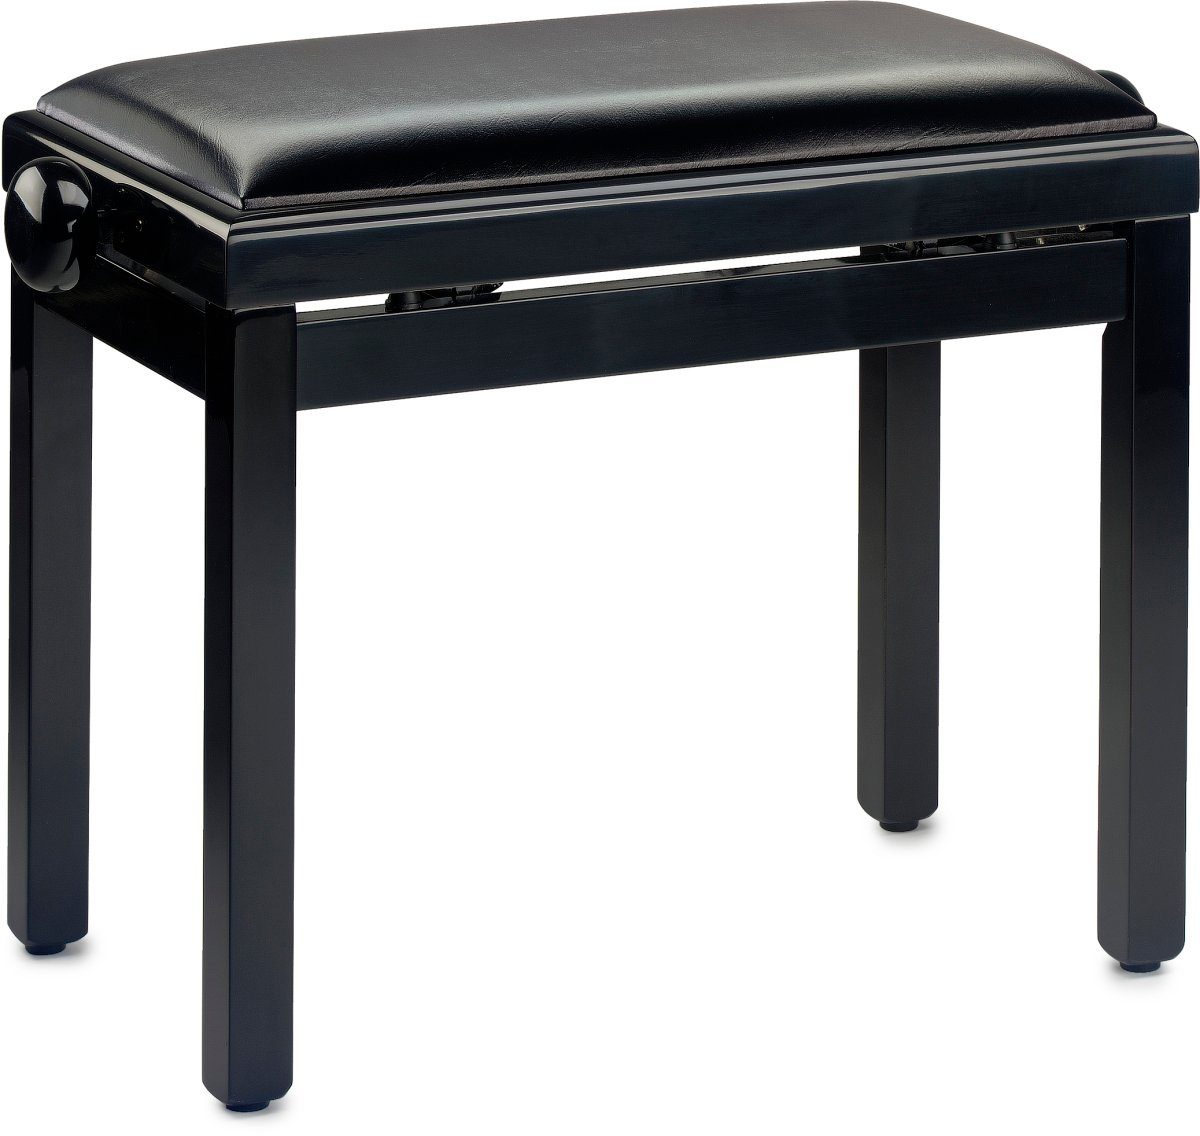 Stagg Klavierbank Klavierbank in Schwarz poliert mit schwarzem Kunstlederbezug